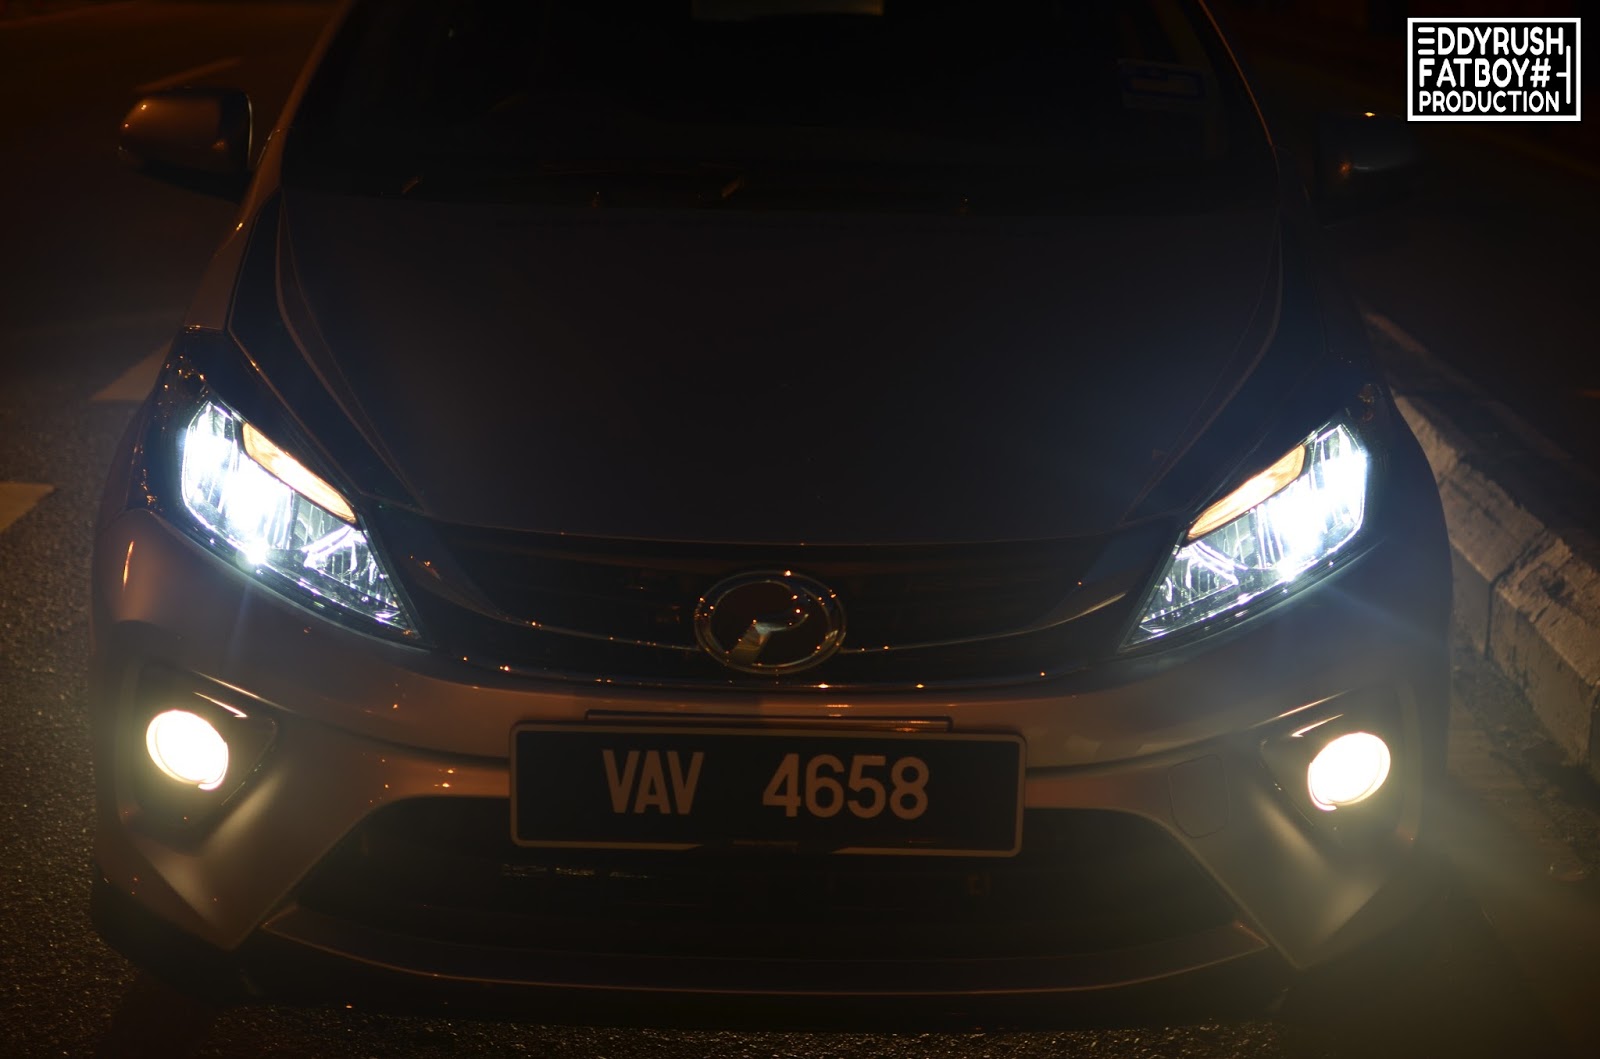 Test Driving 739km In Perak On The All New 2018 Myvi 